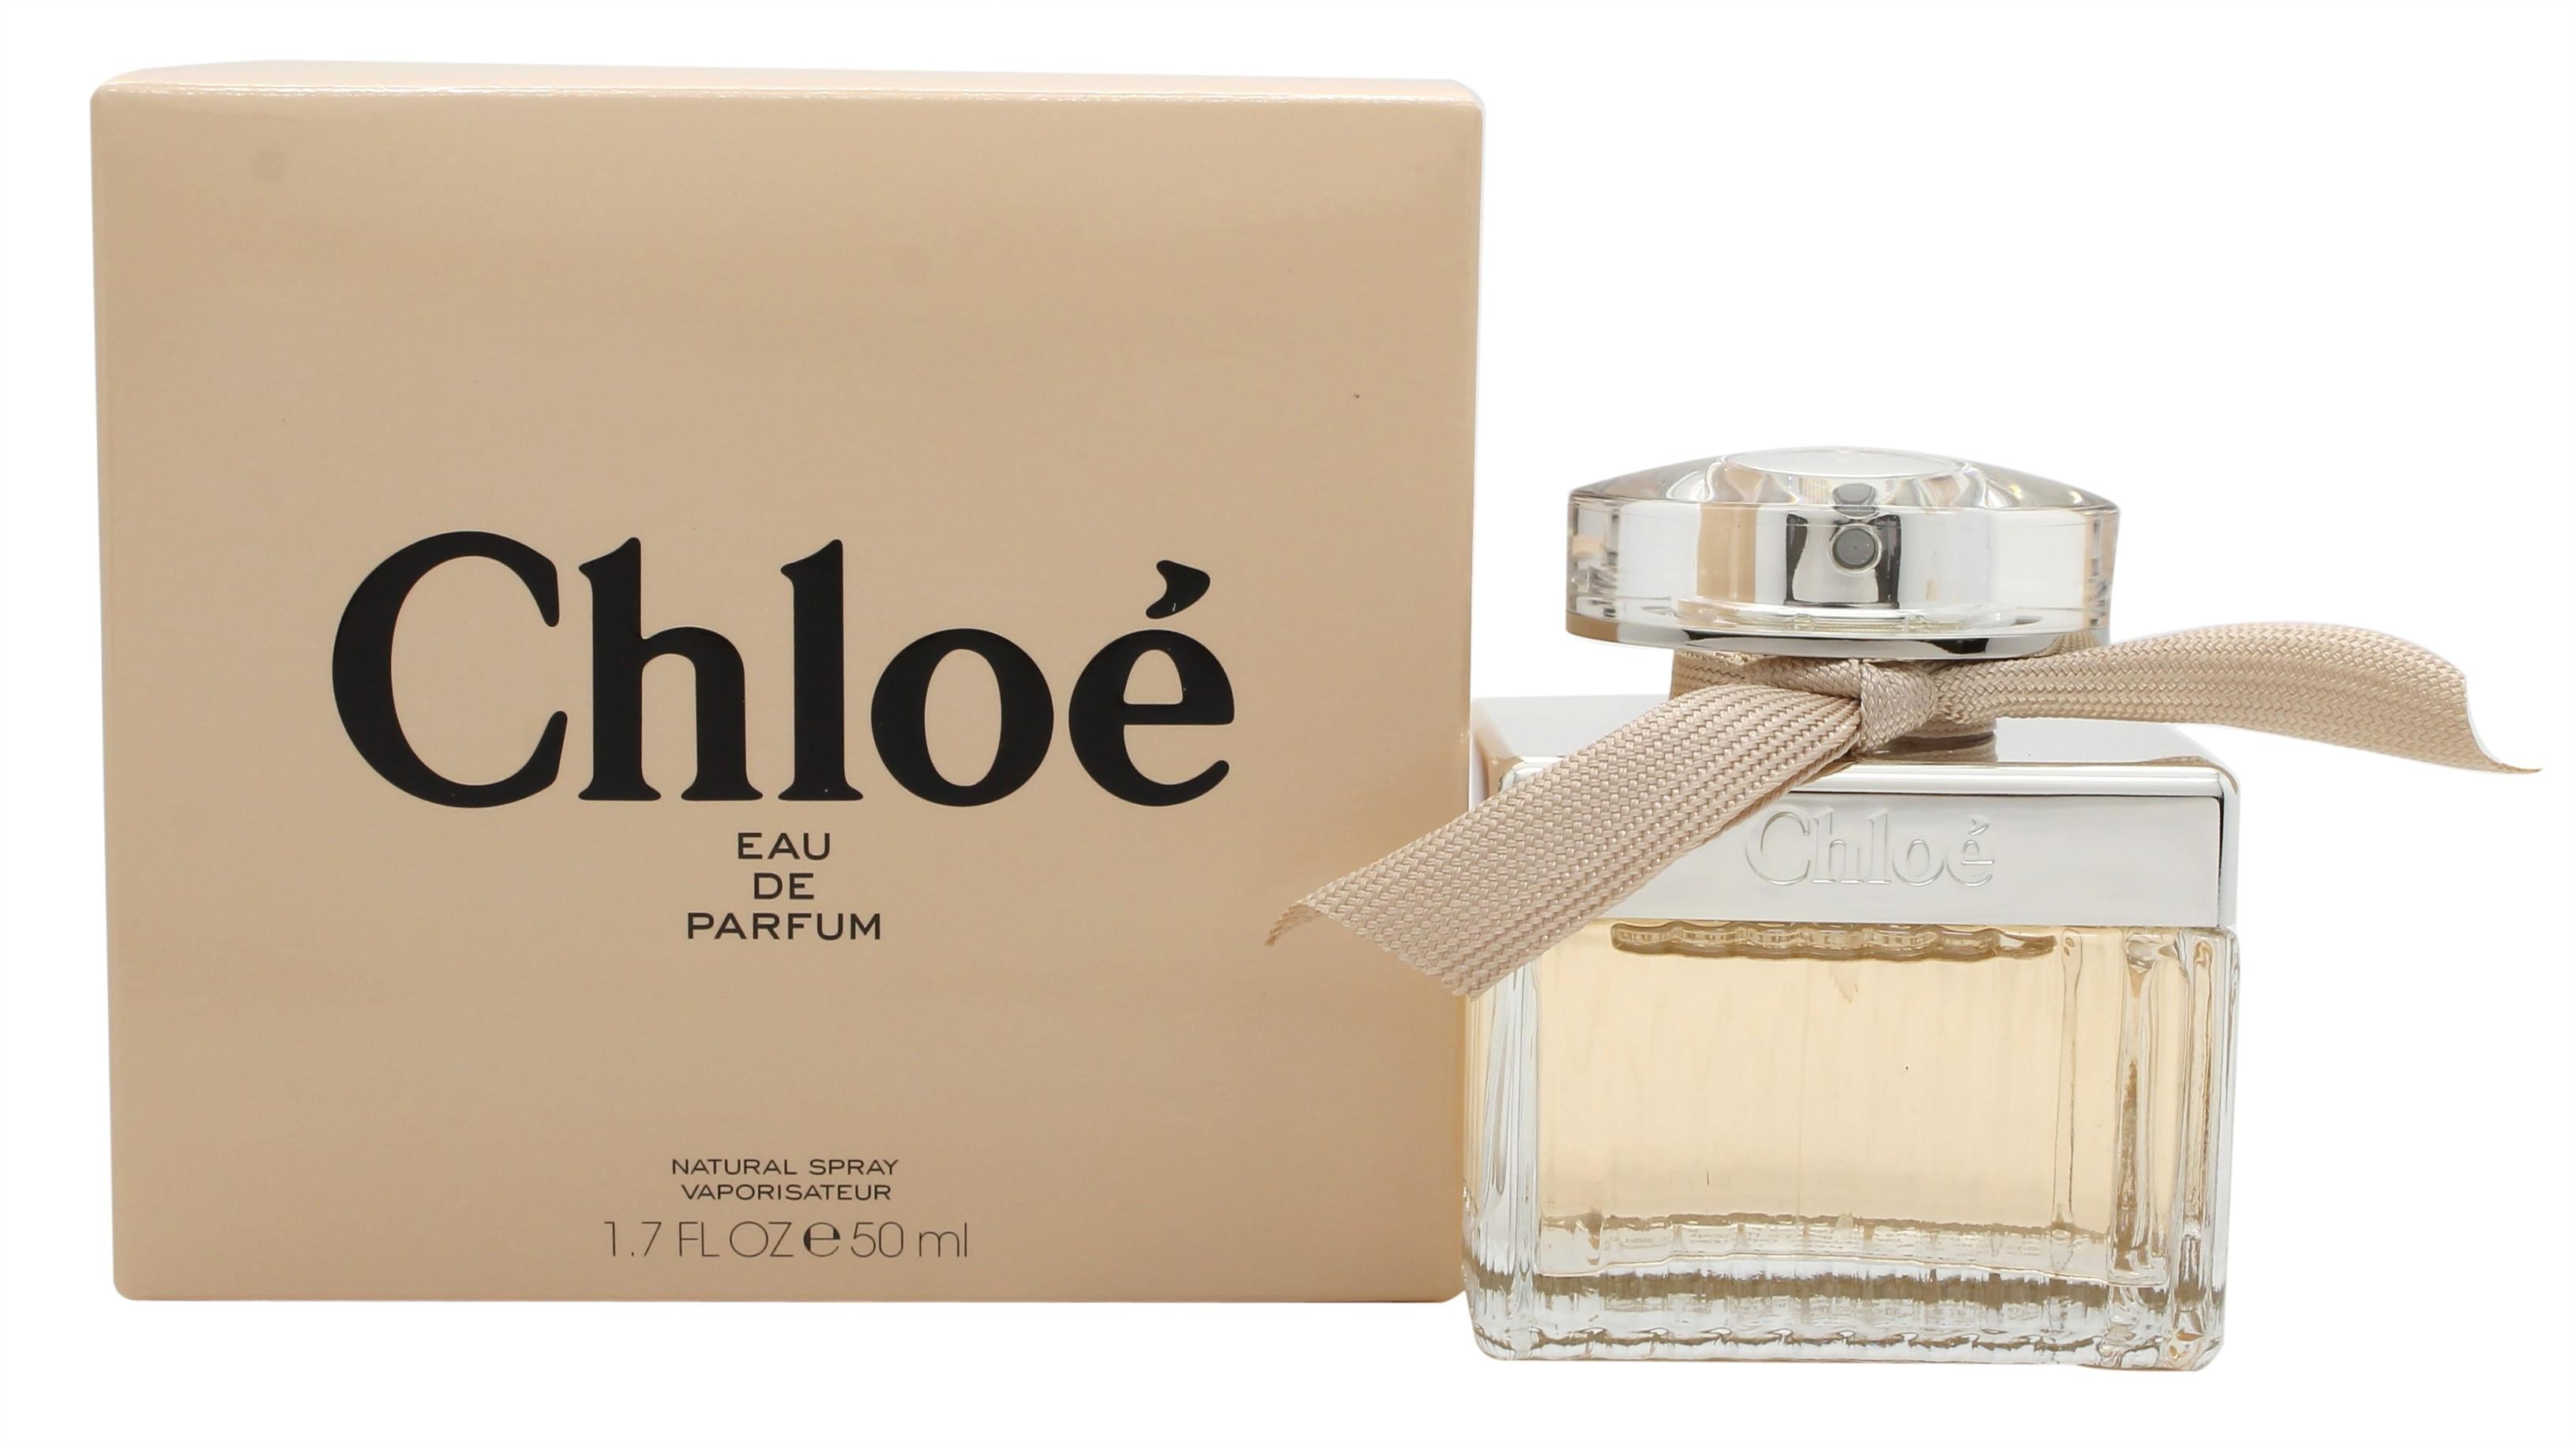 View Chloé Signature Eau de Parfum 50ml Spray information